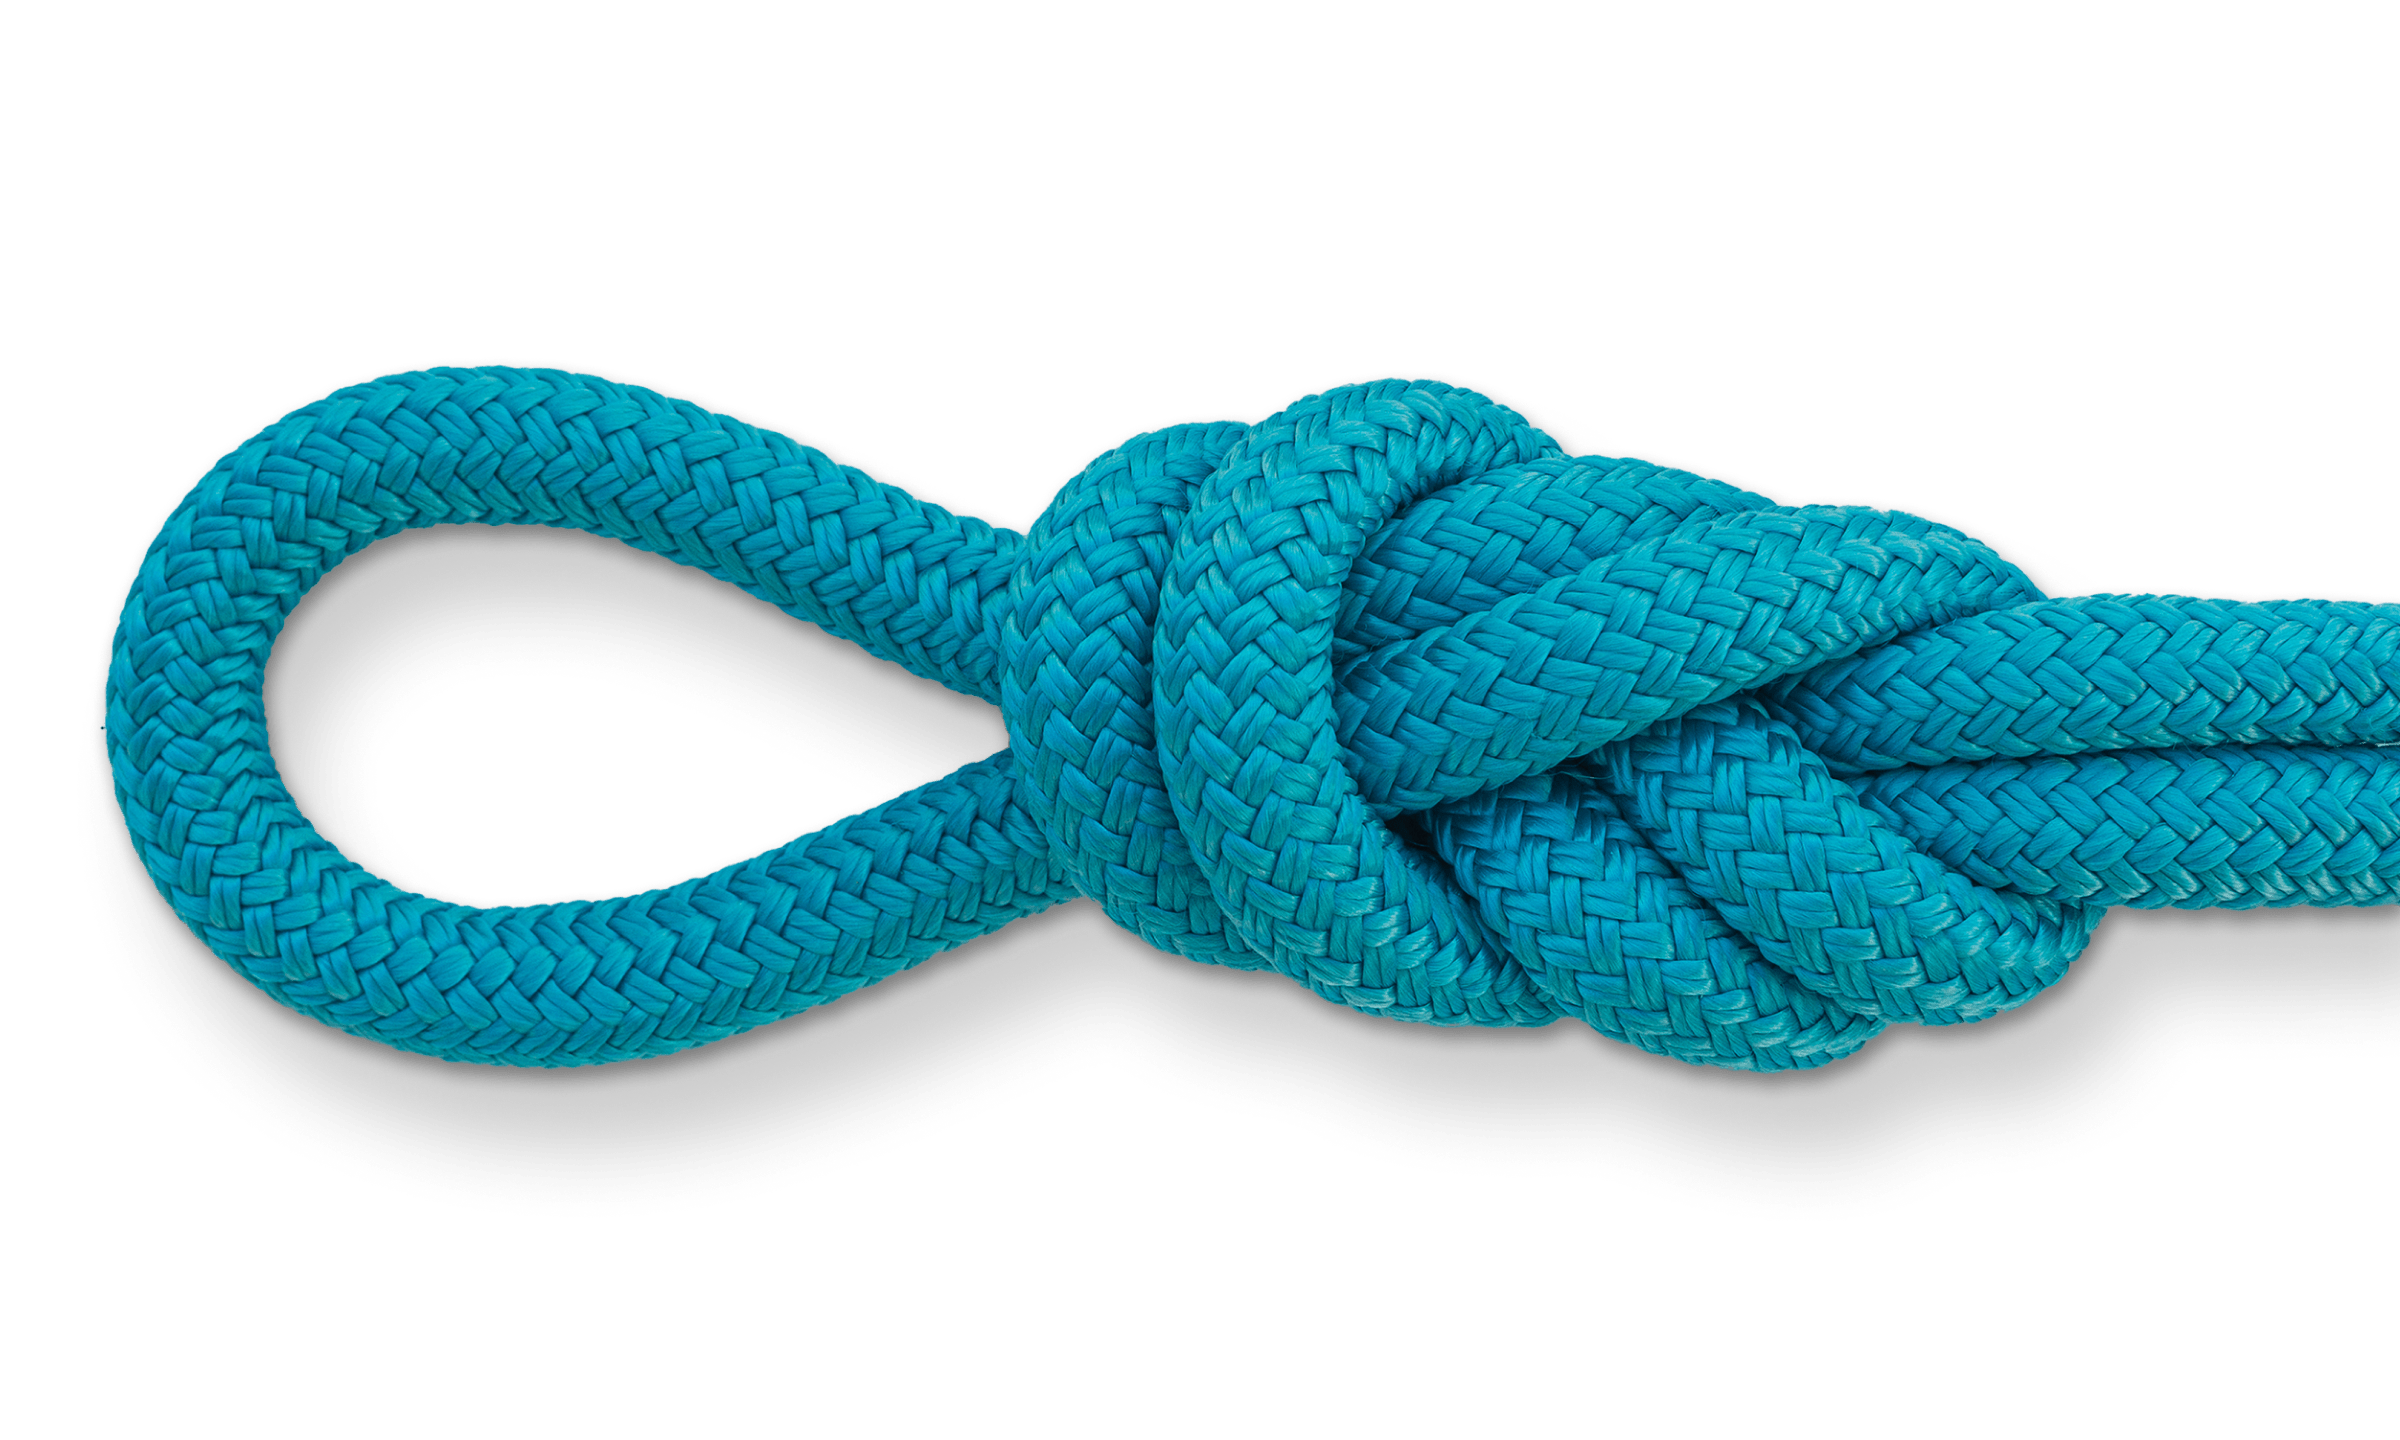 turquoise double braid nylon rope